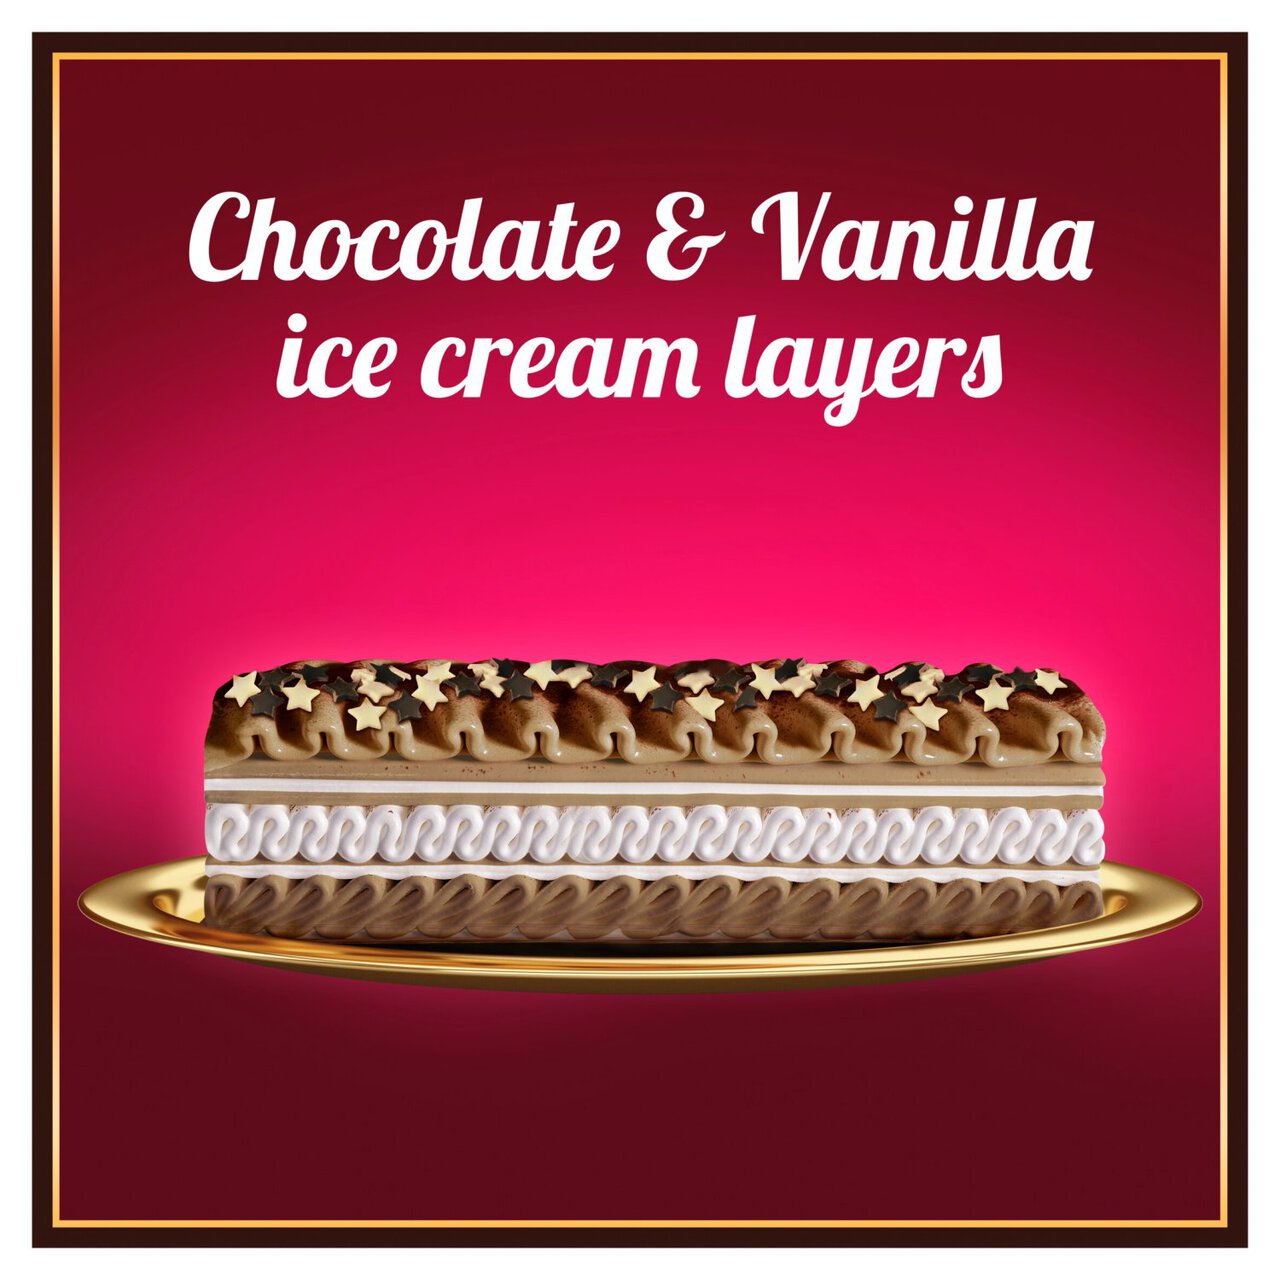 Viennetta Chocolate Yule Log Ice Cream Dessert 650ml